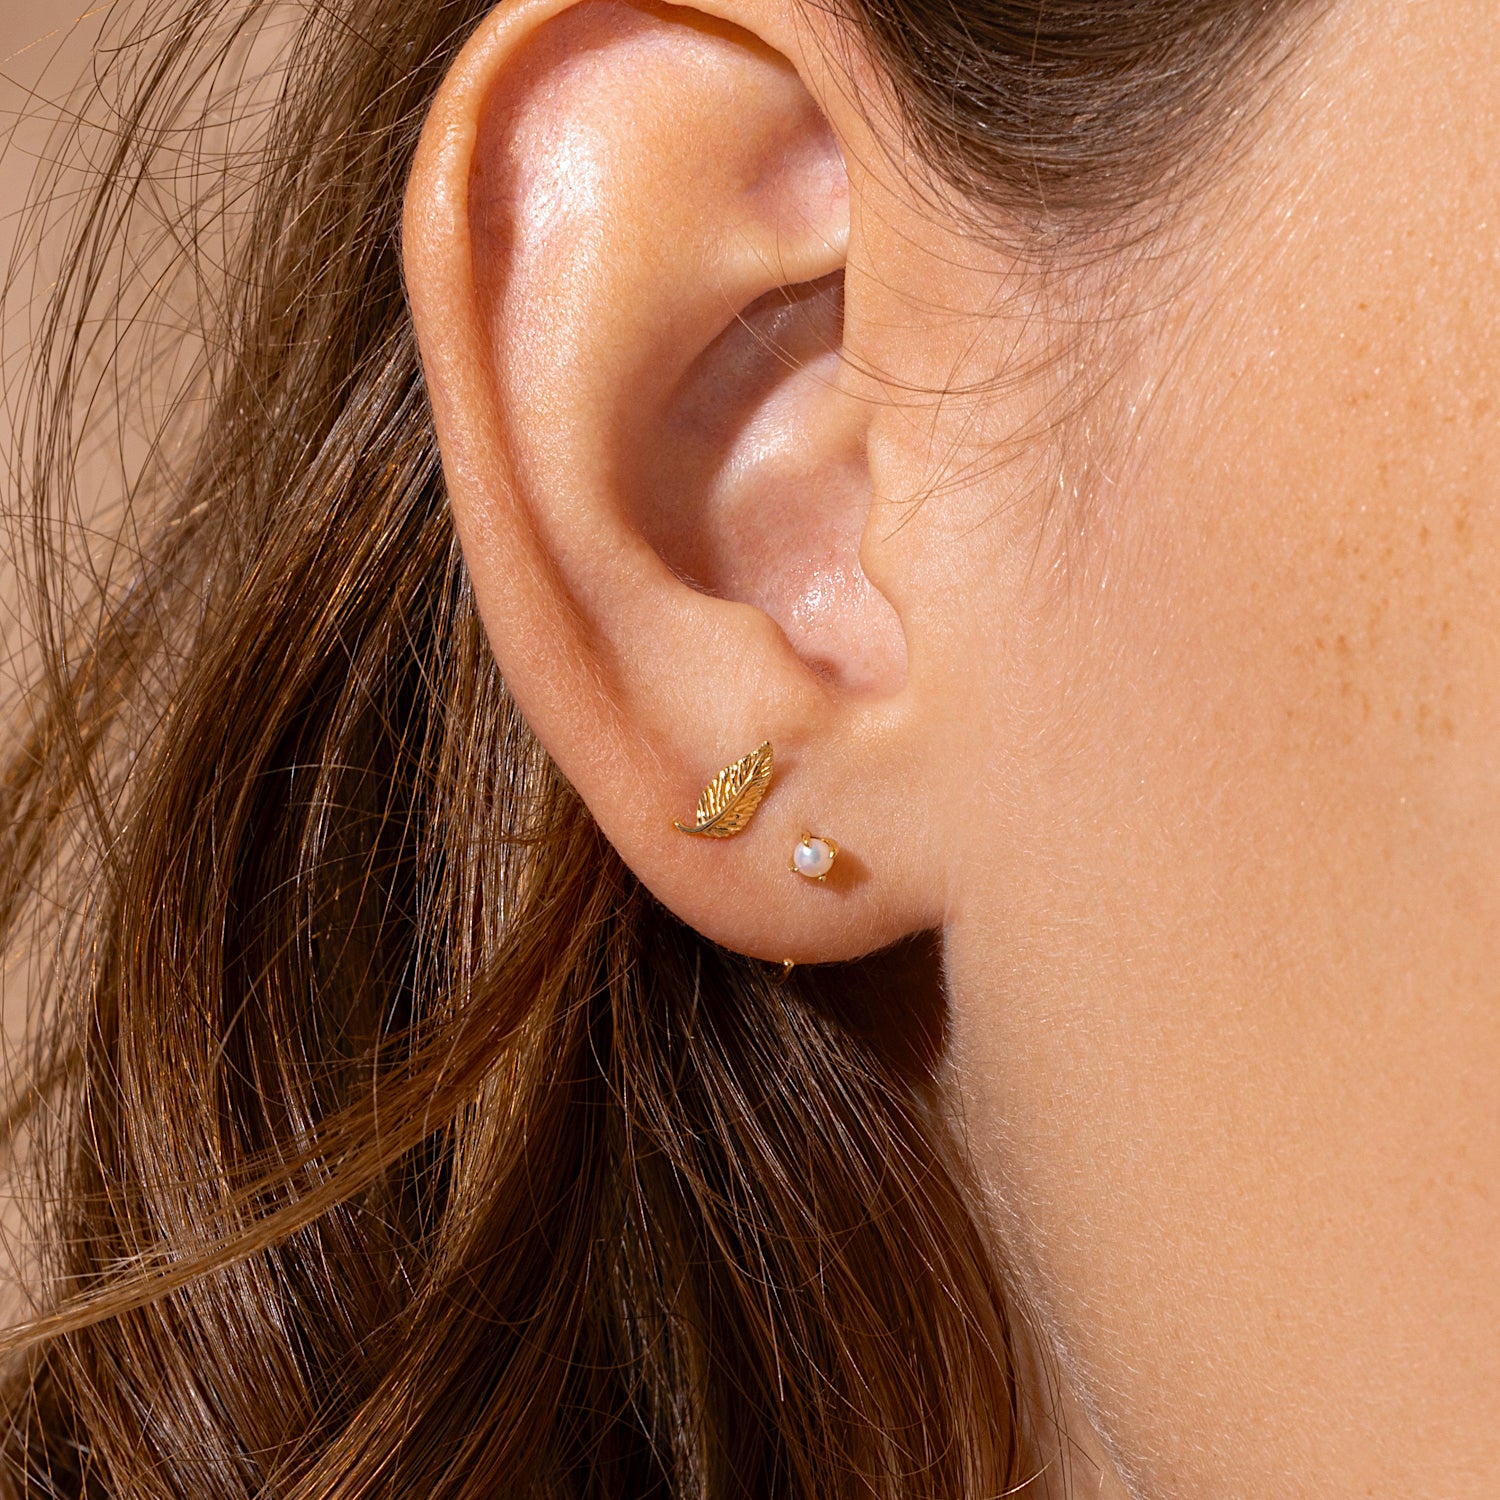 Starburst Earrings, Stainless Steel Earrings, Gothic Jewelry, Mens Earrings,  Gothic Earrings, Starburst Studs, North Star Earrings - Etsy